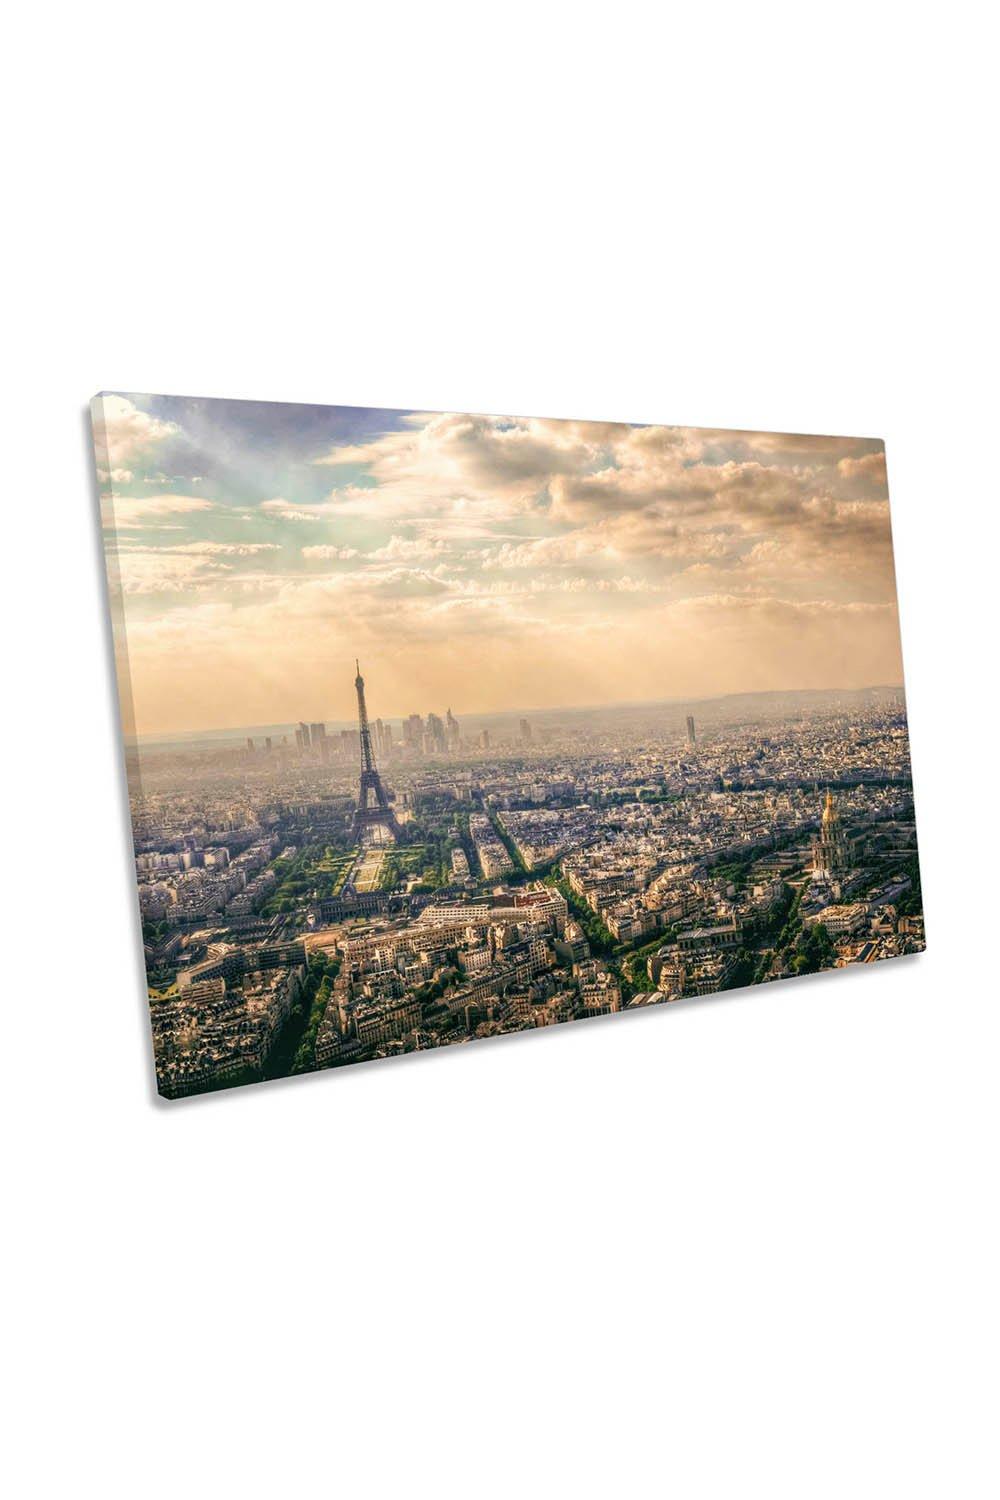 Paris City Skyline Eiffel Tower Canvas Wall Art Picture Print